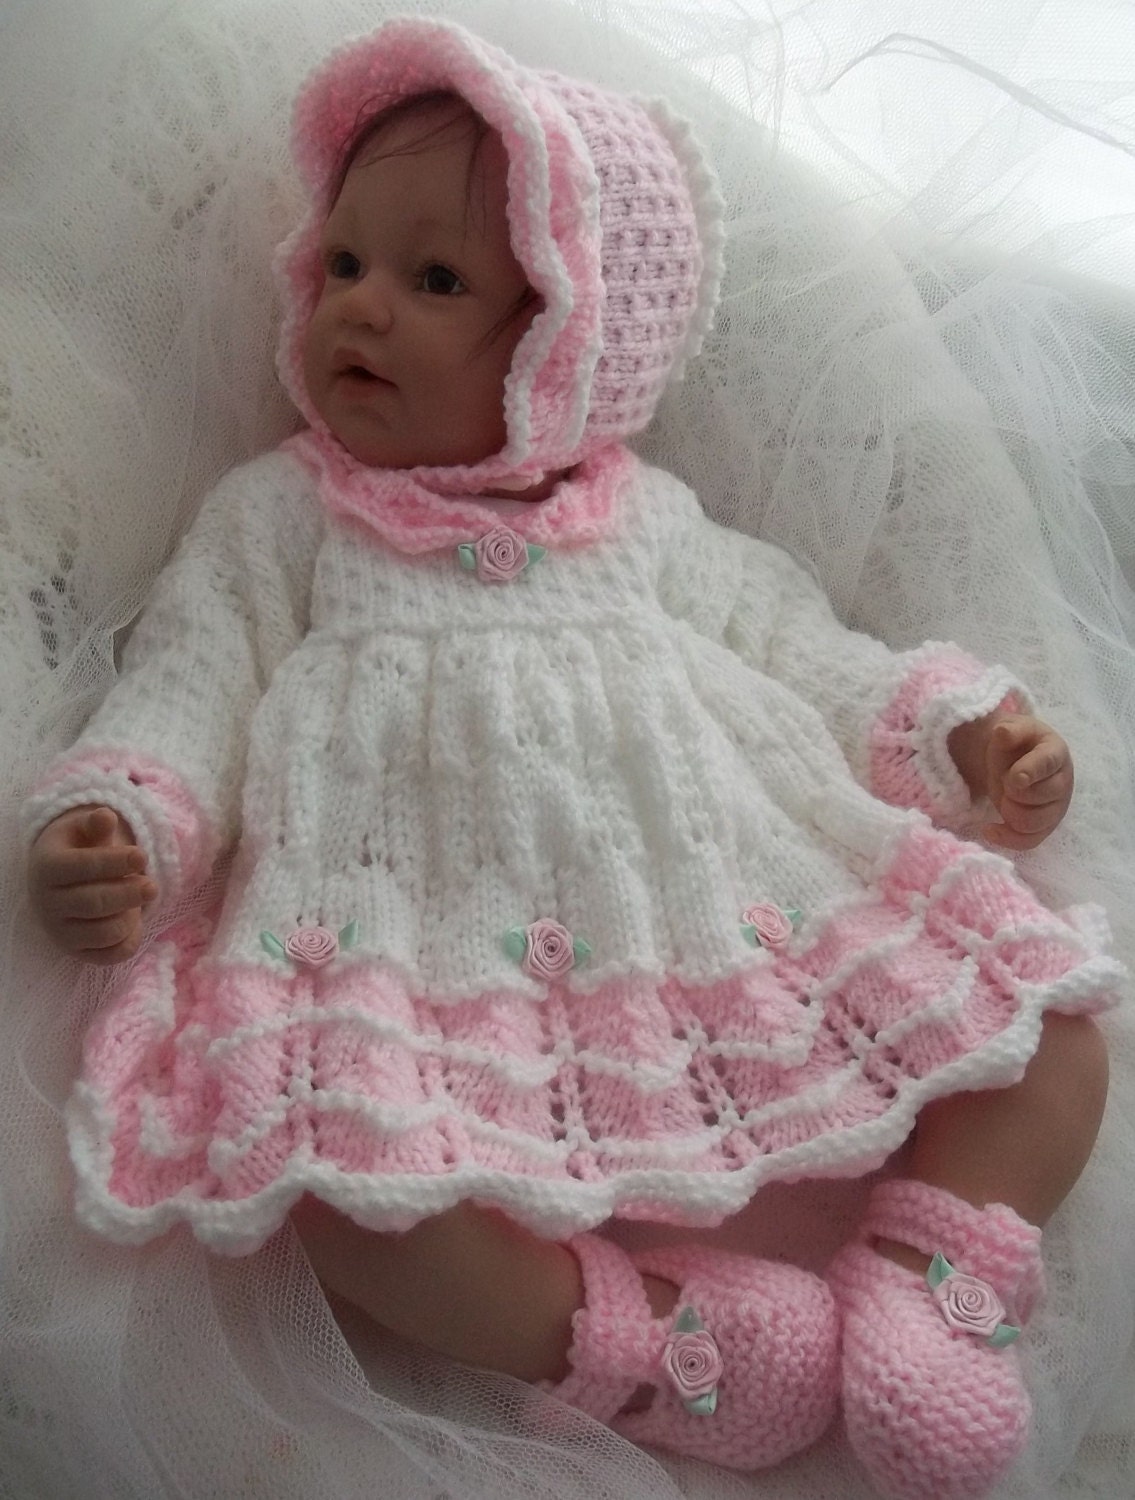 Reborn doll dress bonnet & bootees set knitting pattern in DK Baby sizes. 22" 